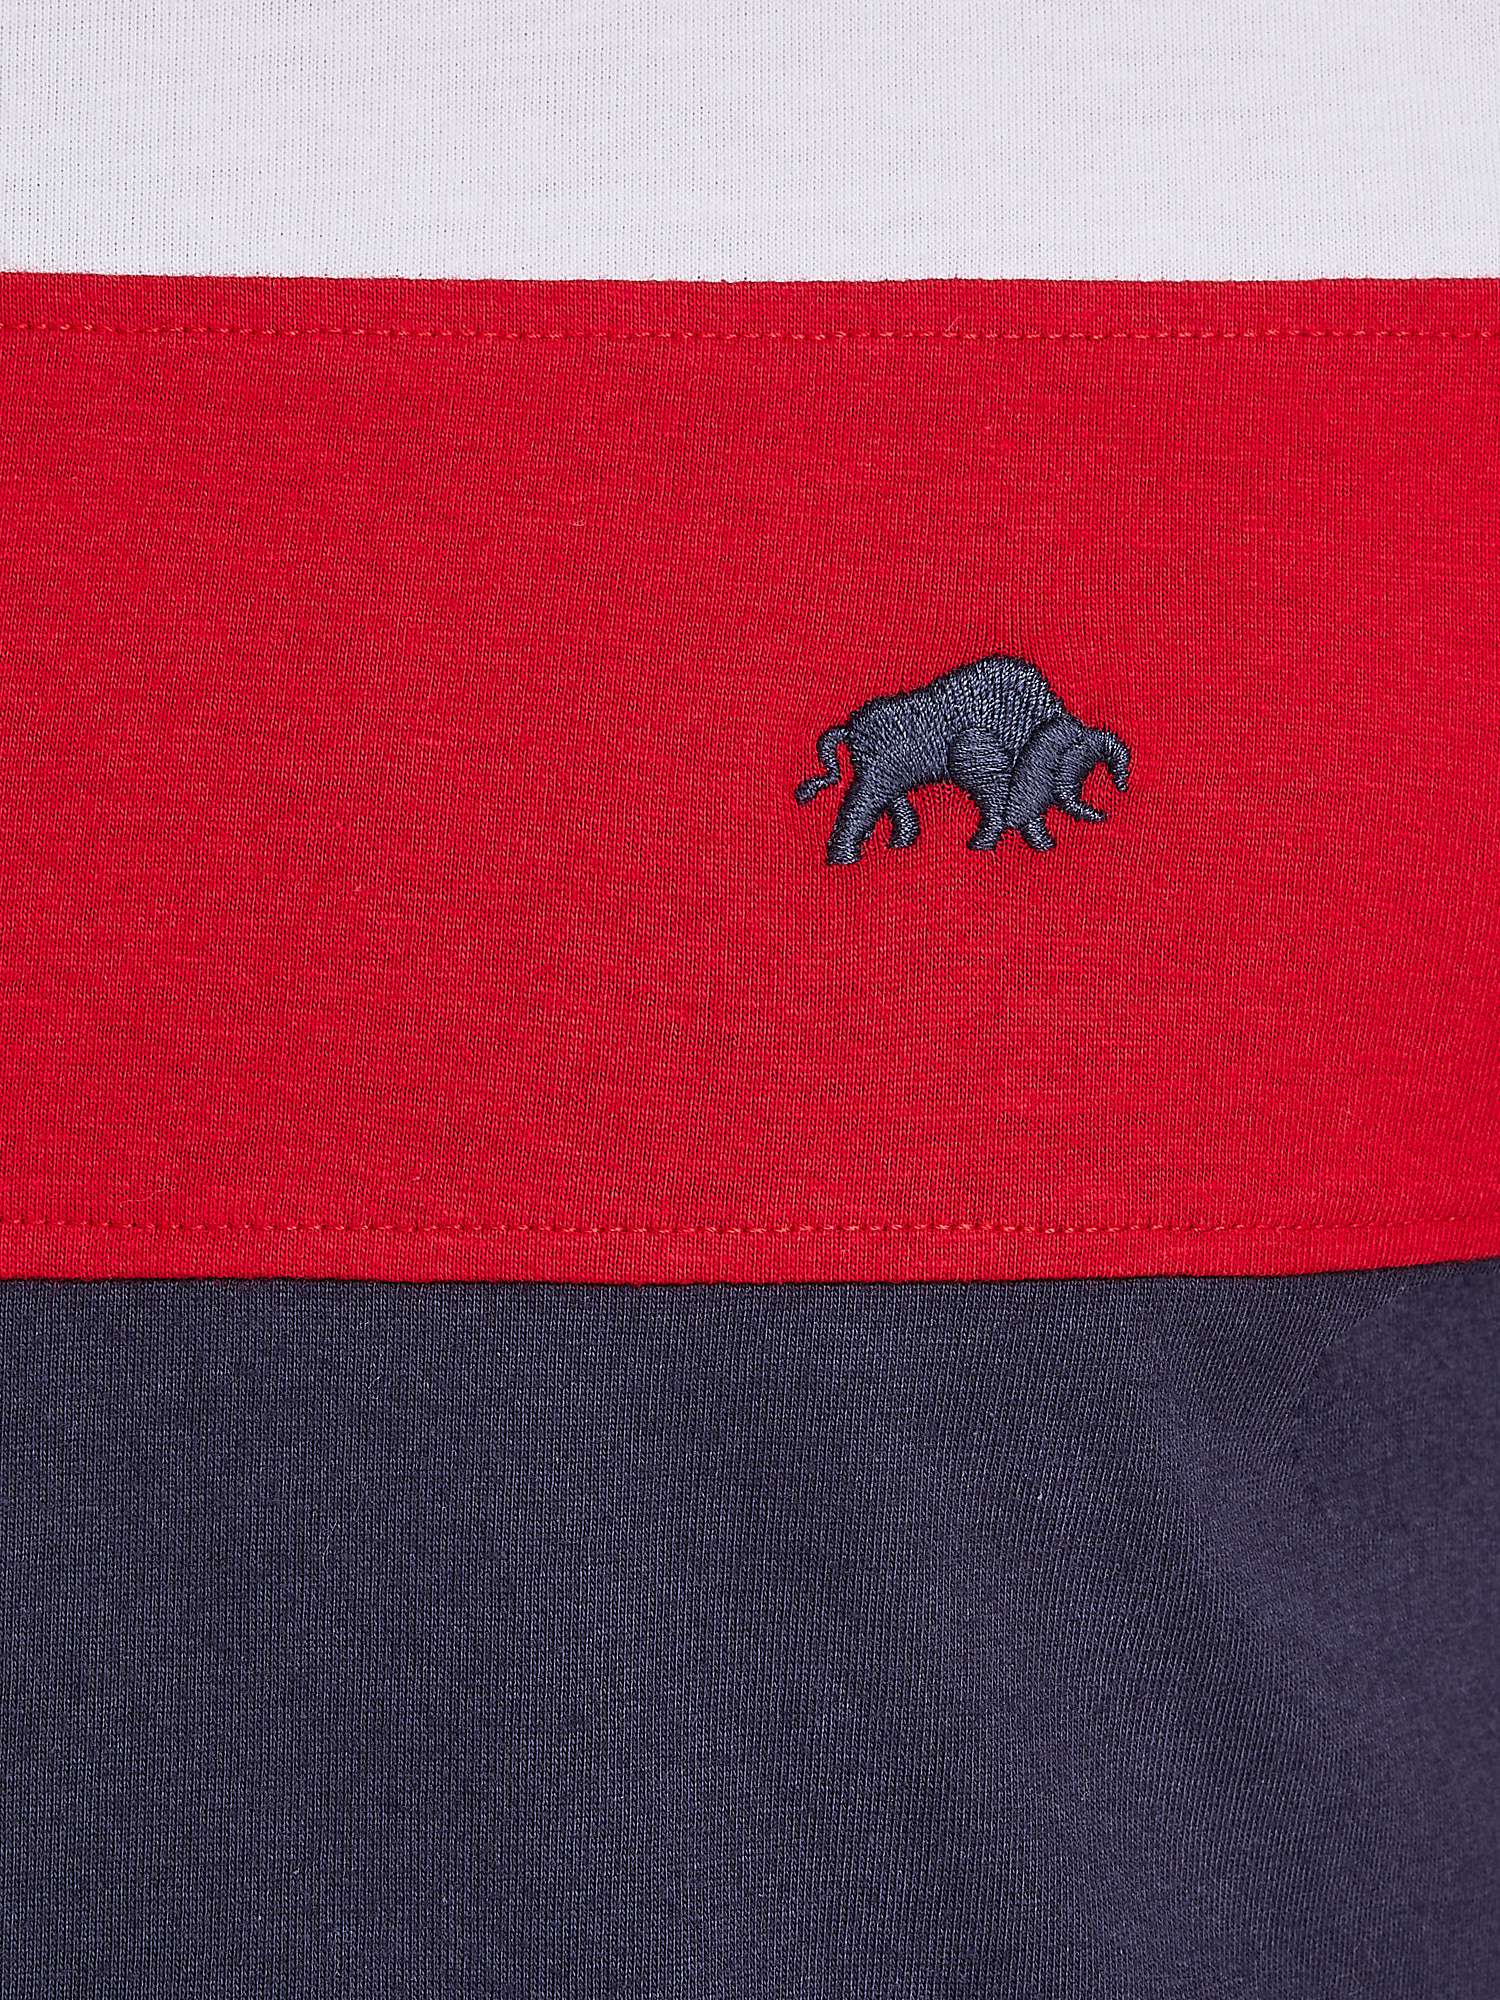 Buy Raging Bull Cut & Sew T-Shirt, Red/Multi Online at johnlewis.com